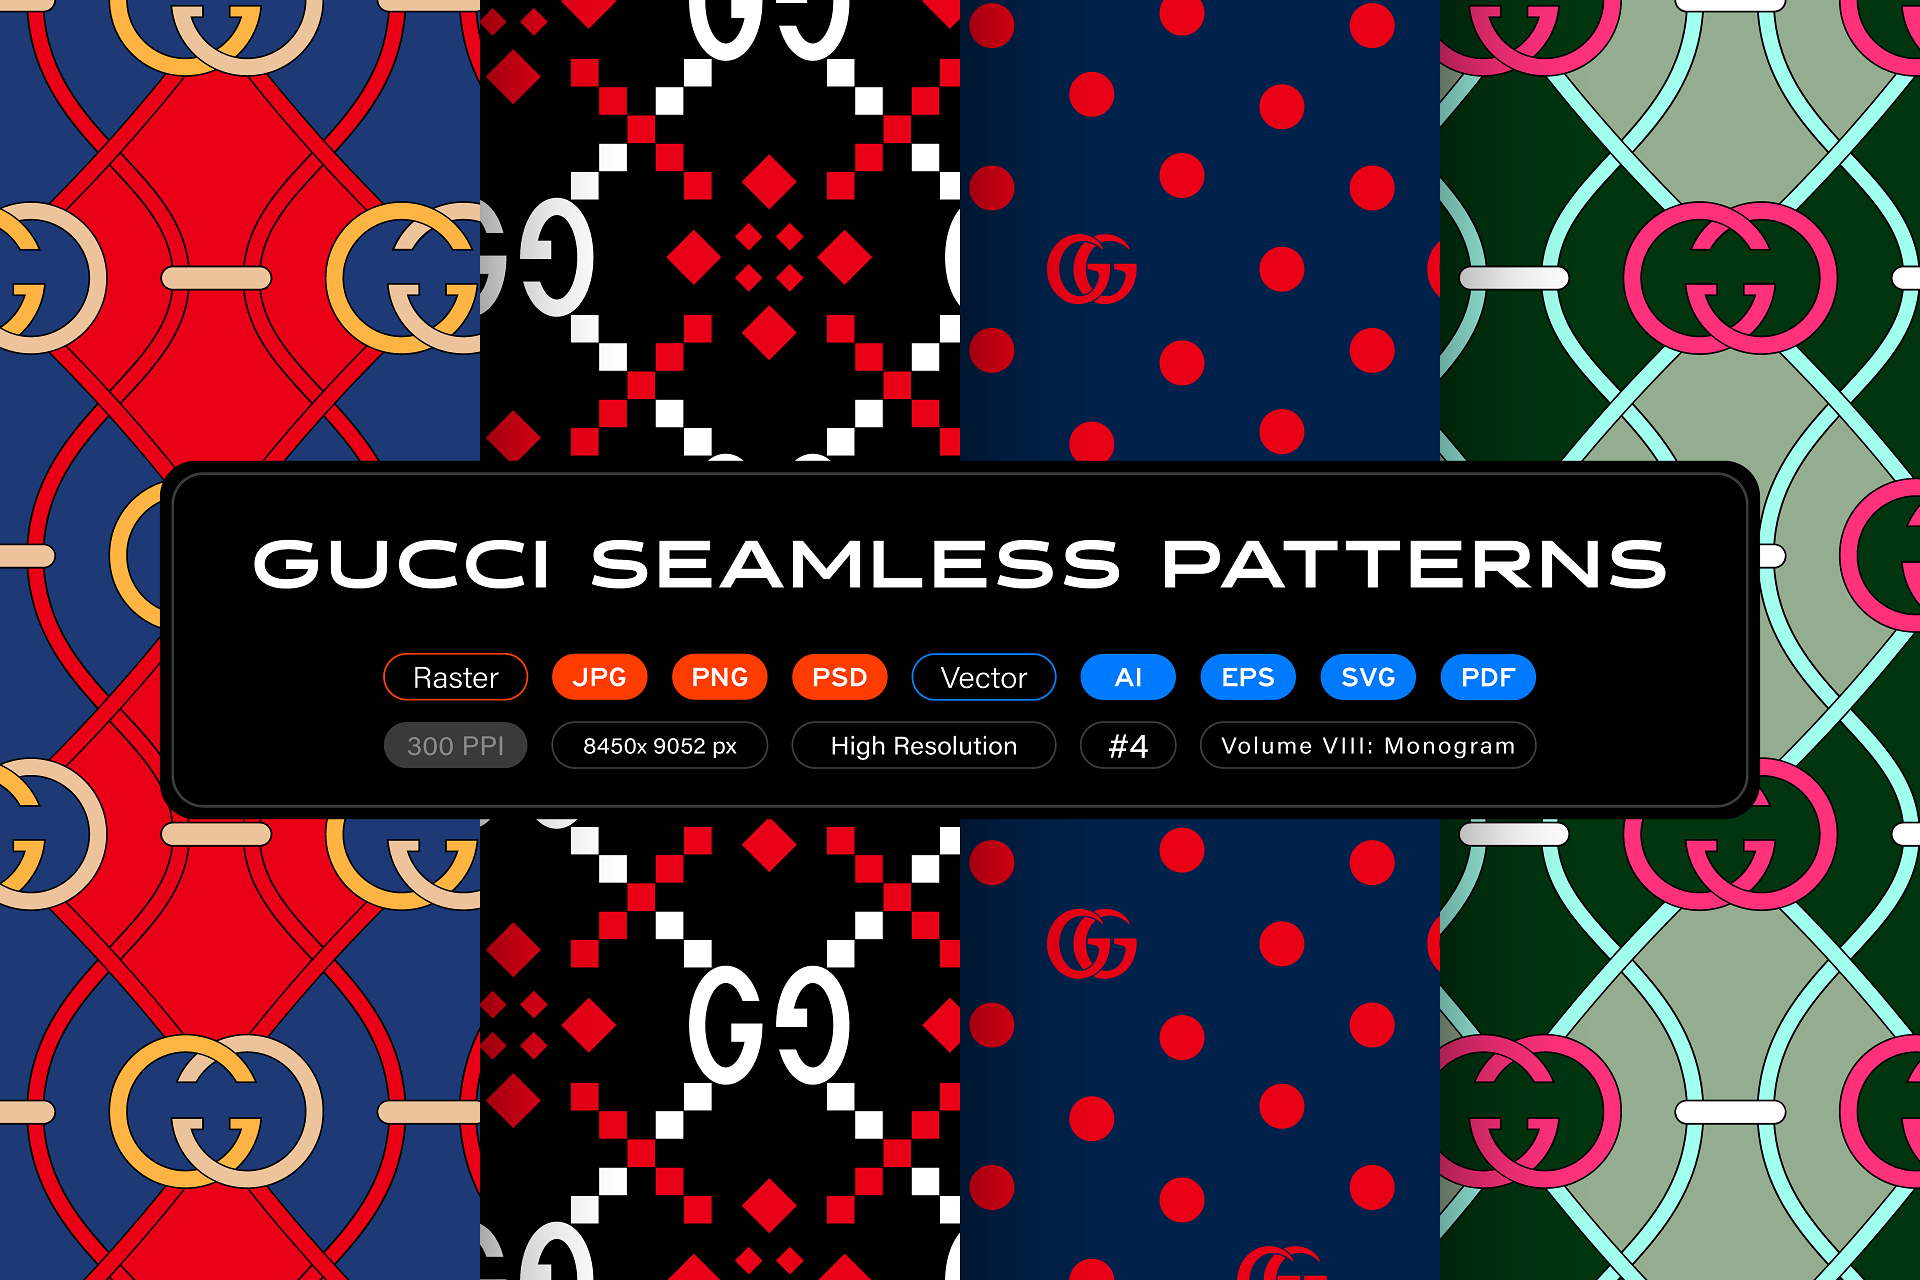 Gucci Seamless Patterns, Vol. 8: Monogram by itsfarahbakhsh on